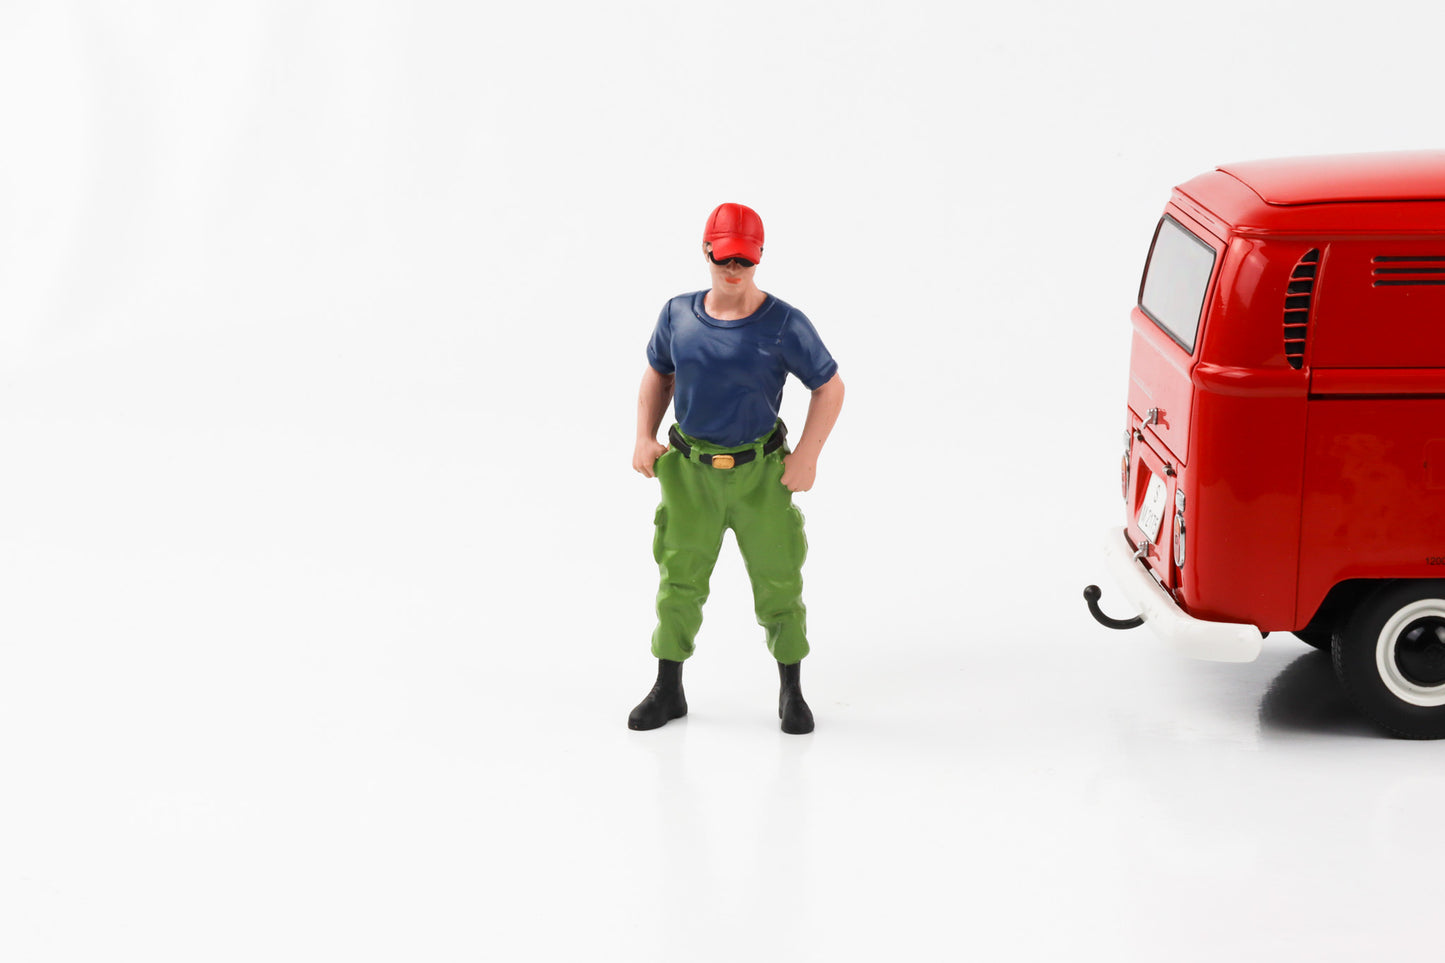 1:18 Figure Fire Department Firefighters Captain off Duty American Diorama Figures